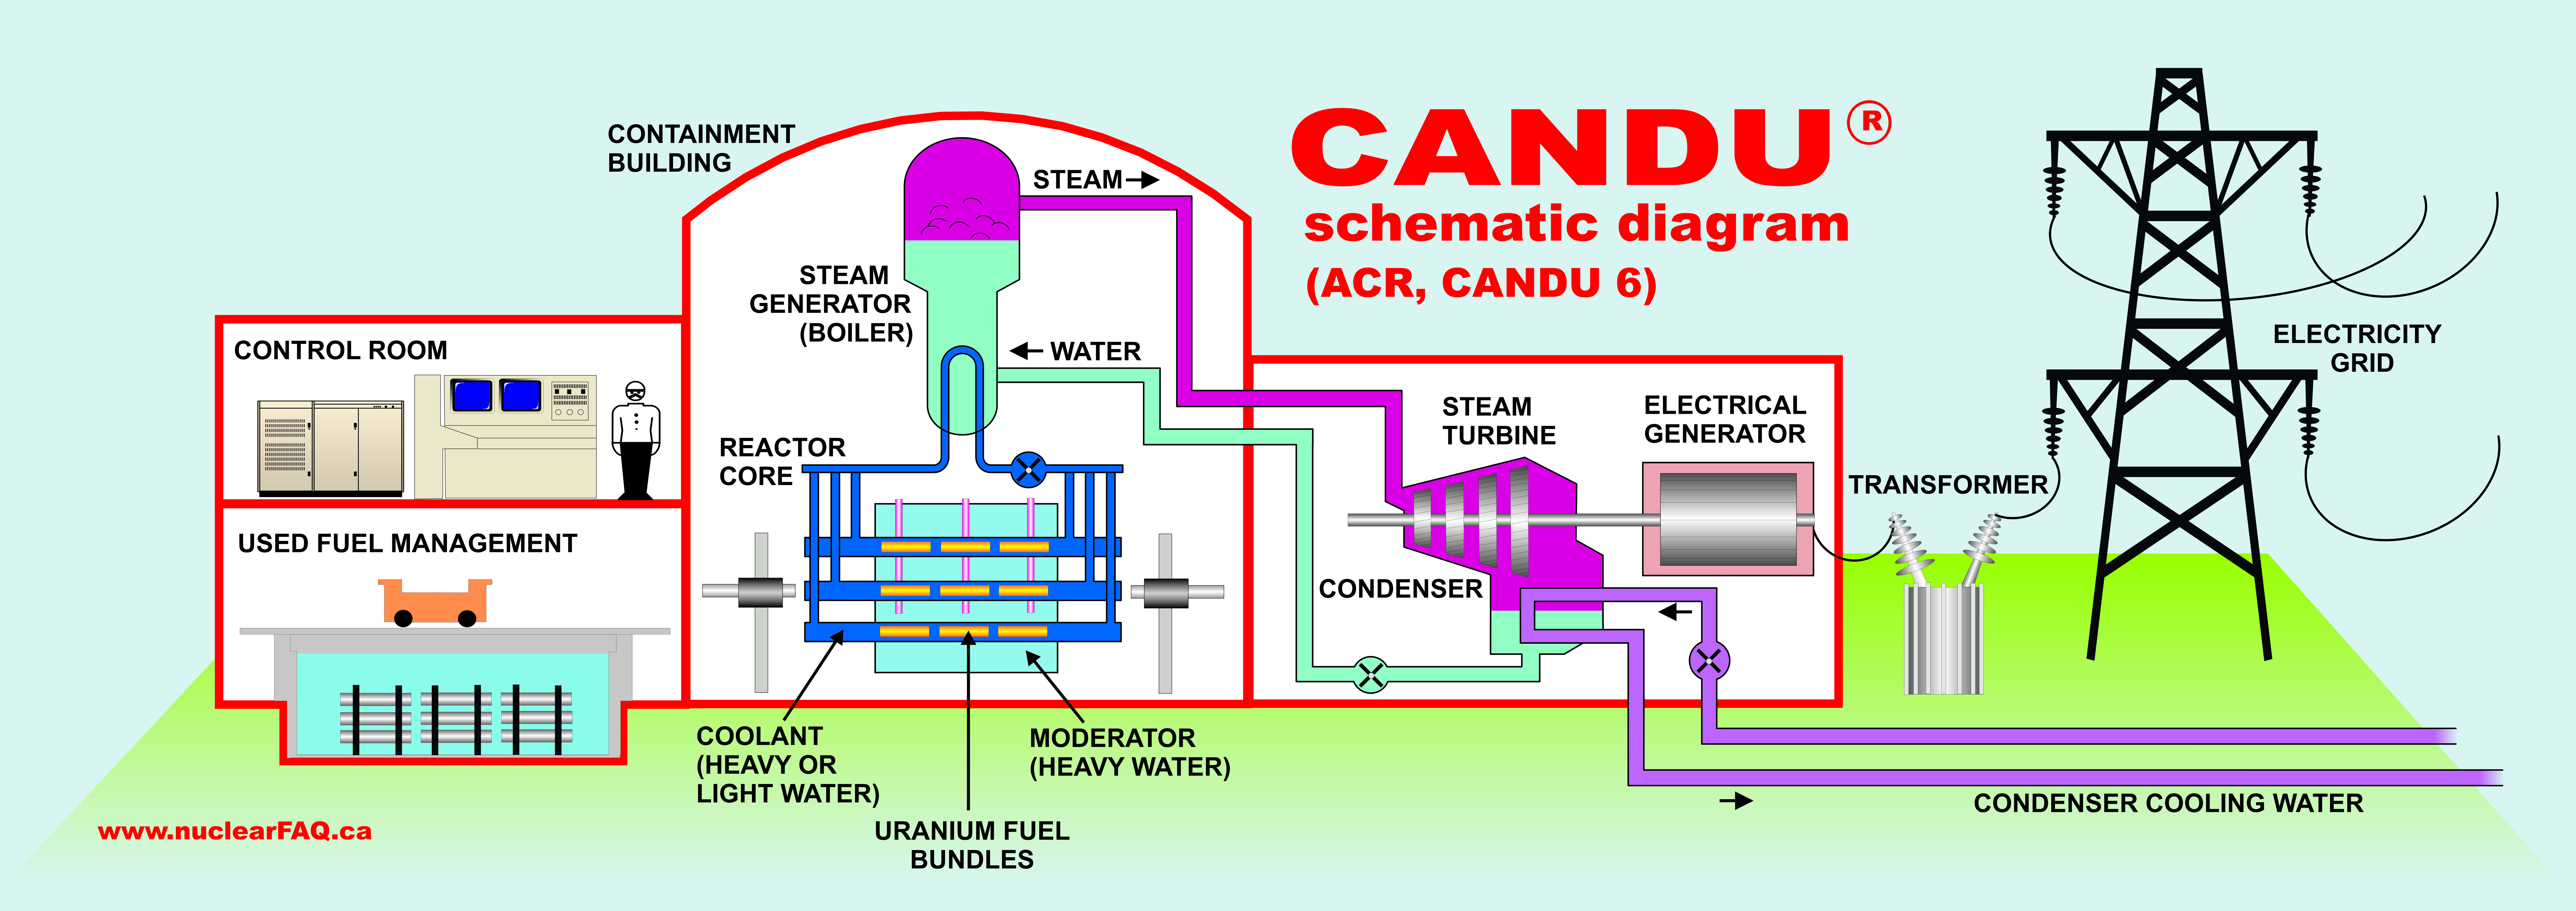 Nuclear Energy Diagram The Canadian Nuclear Faq Section A Candu Technology